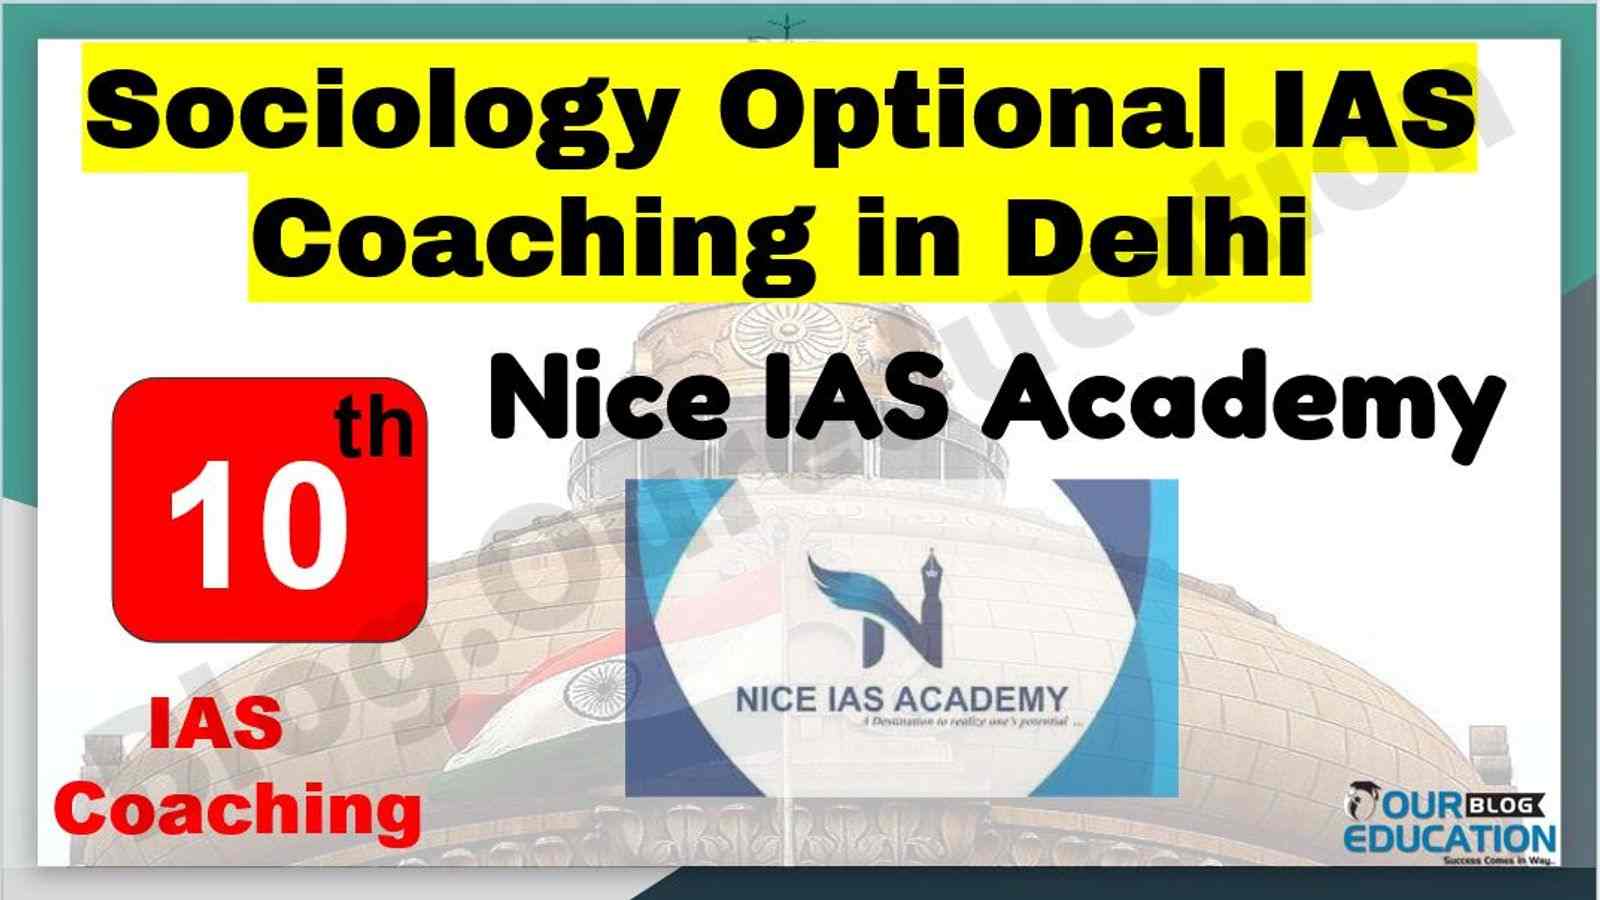 Sociology Optional IAS coaching in Delhi